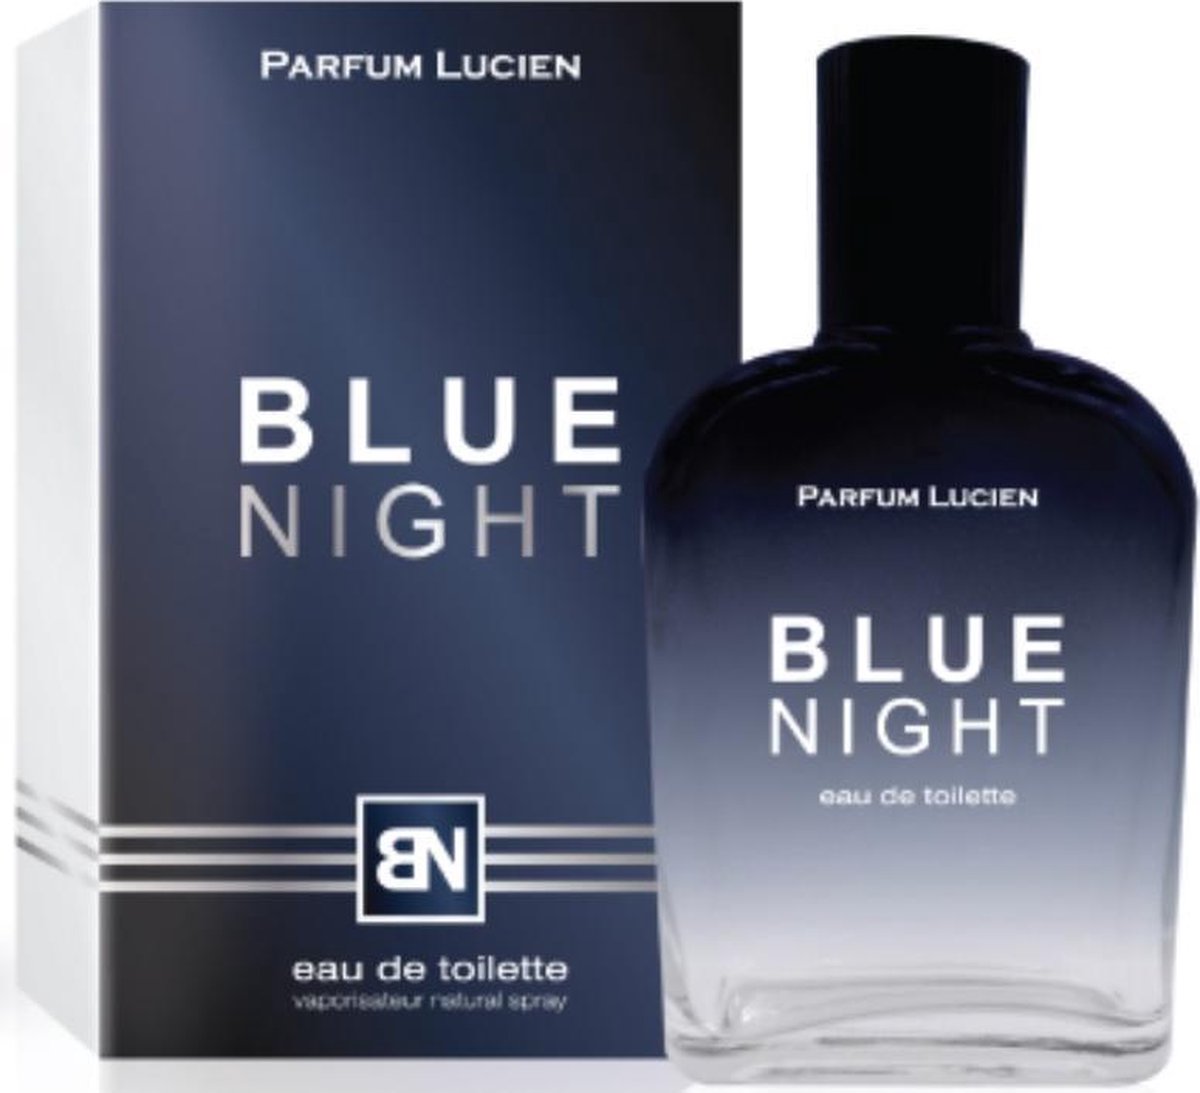 Parfum Lucien Blue Night | bol